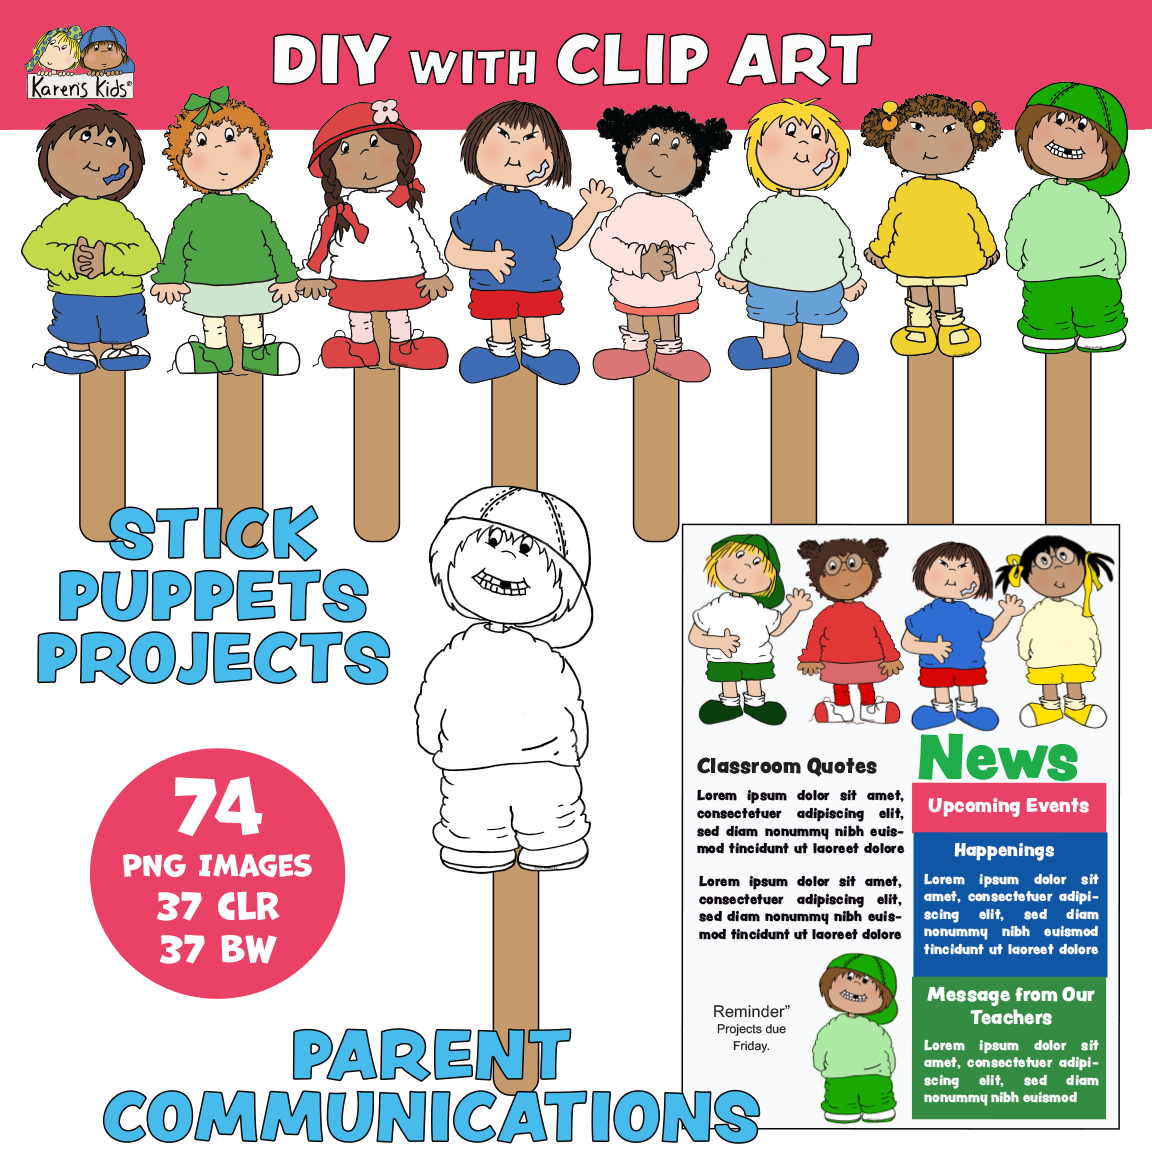 Clip Art Kids You Know (Karen's Kids Clipart)